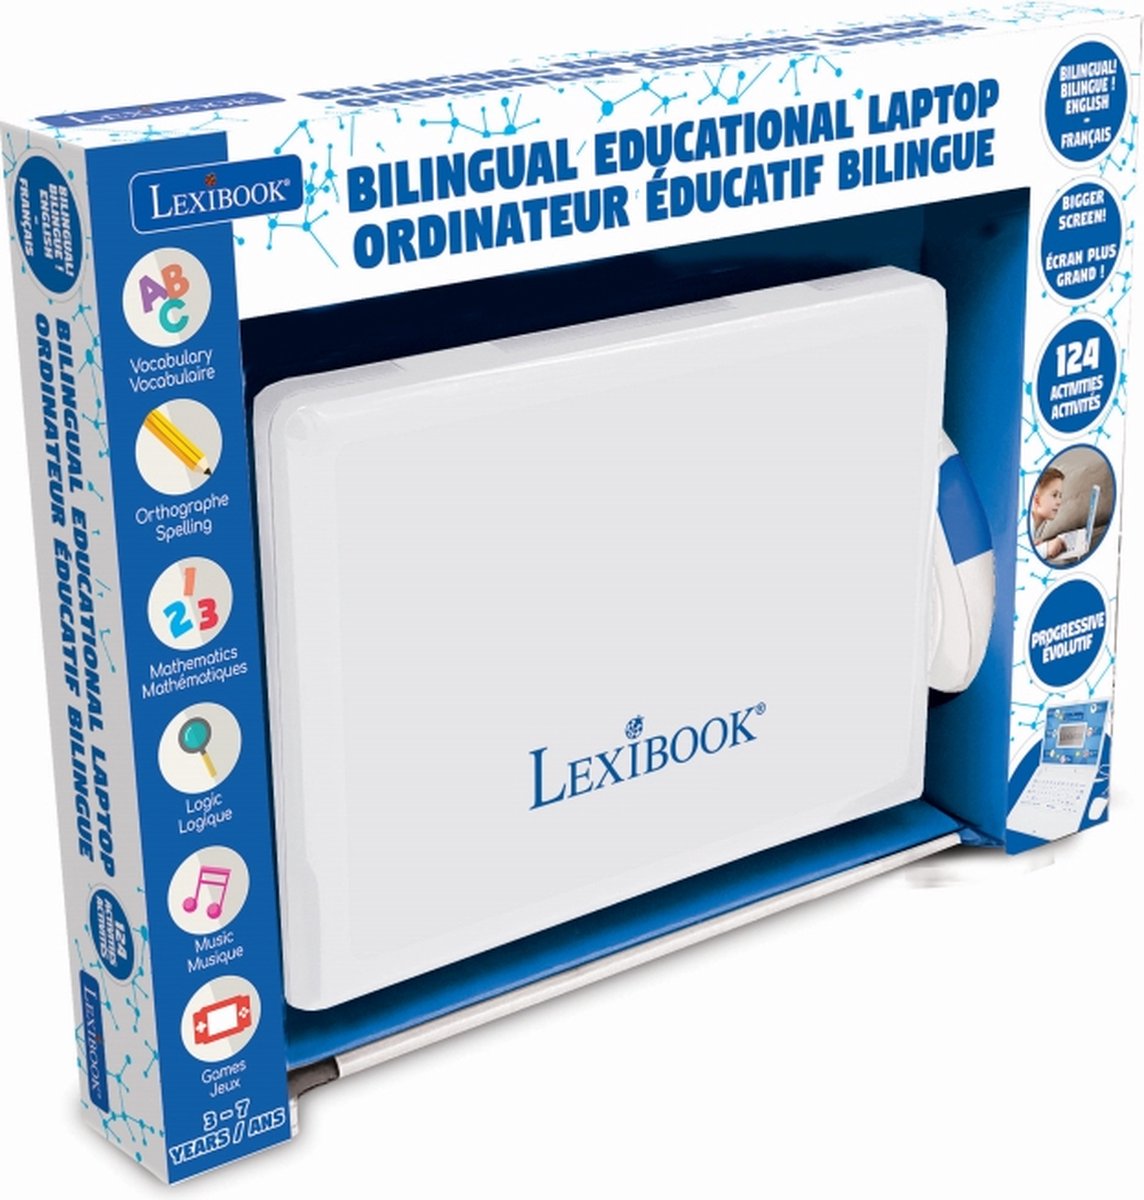 Lexibook Ordinateur éducatif 120 activités educatieve laptop 120